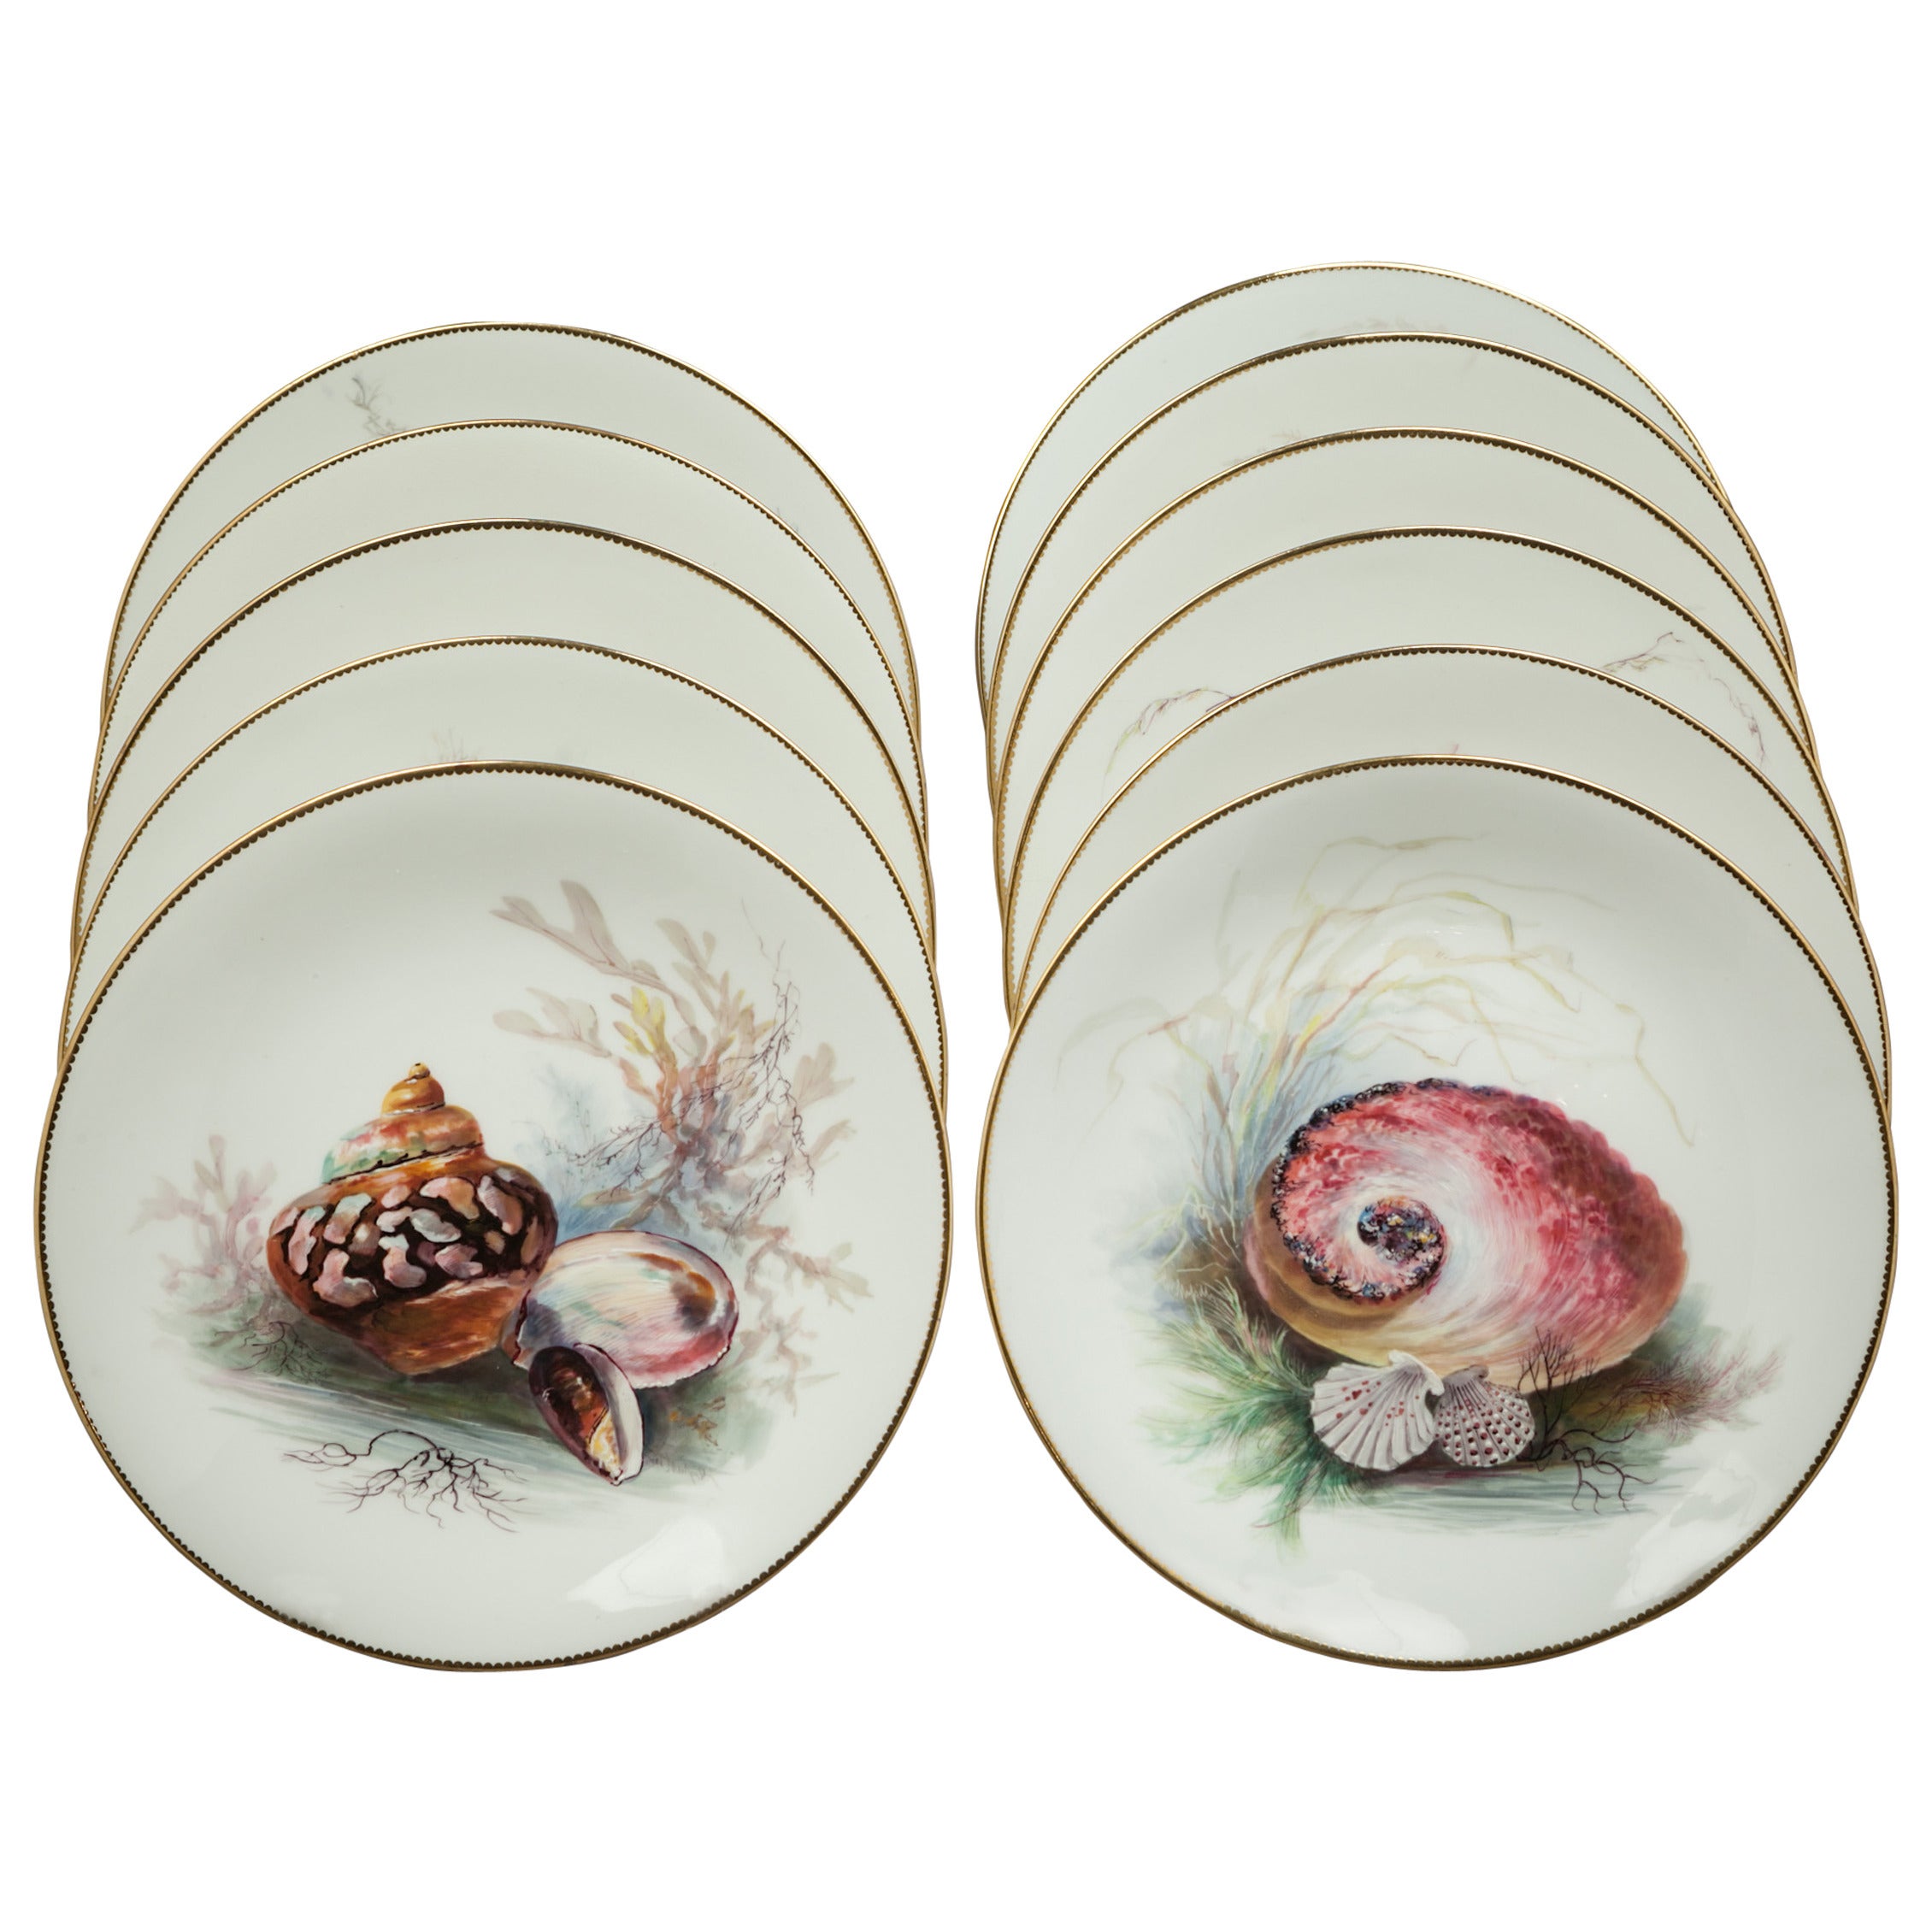 Set of 11 English Minton Porcelain Plates, circa 1880